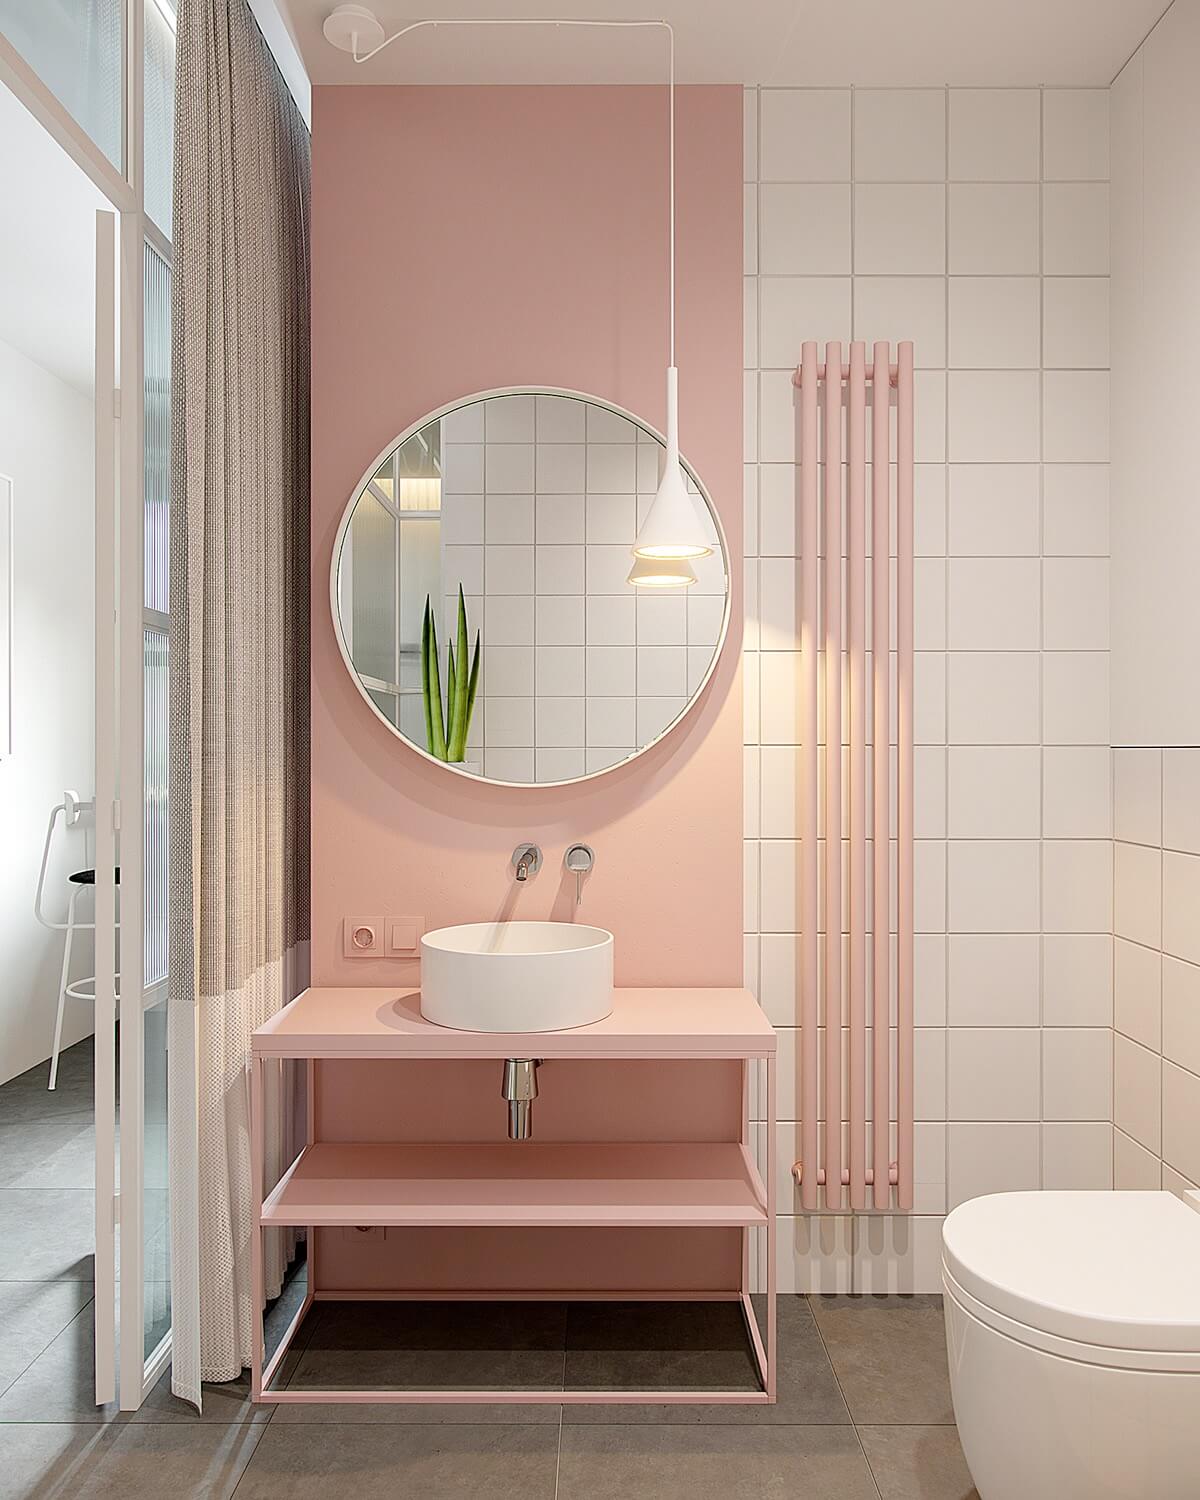 Bathrooms Decor Ideas in Pastel Colors